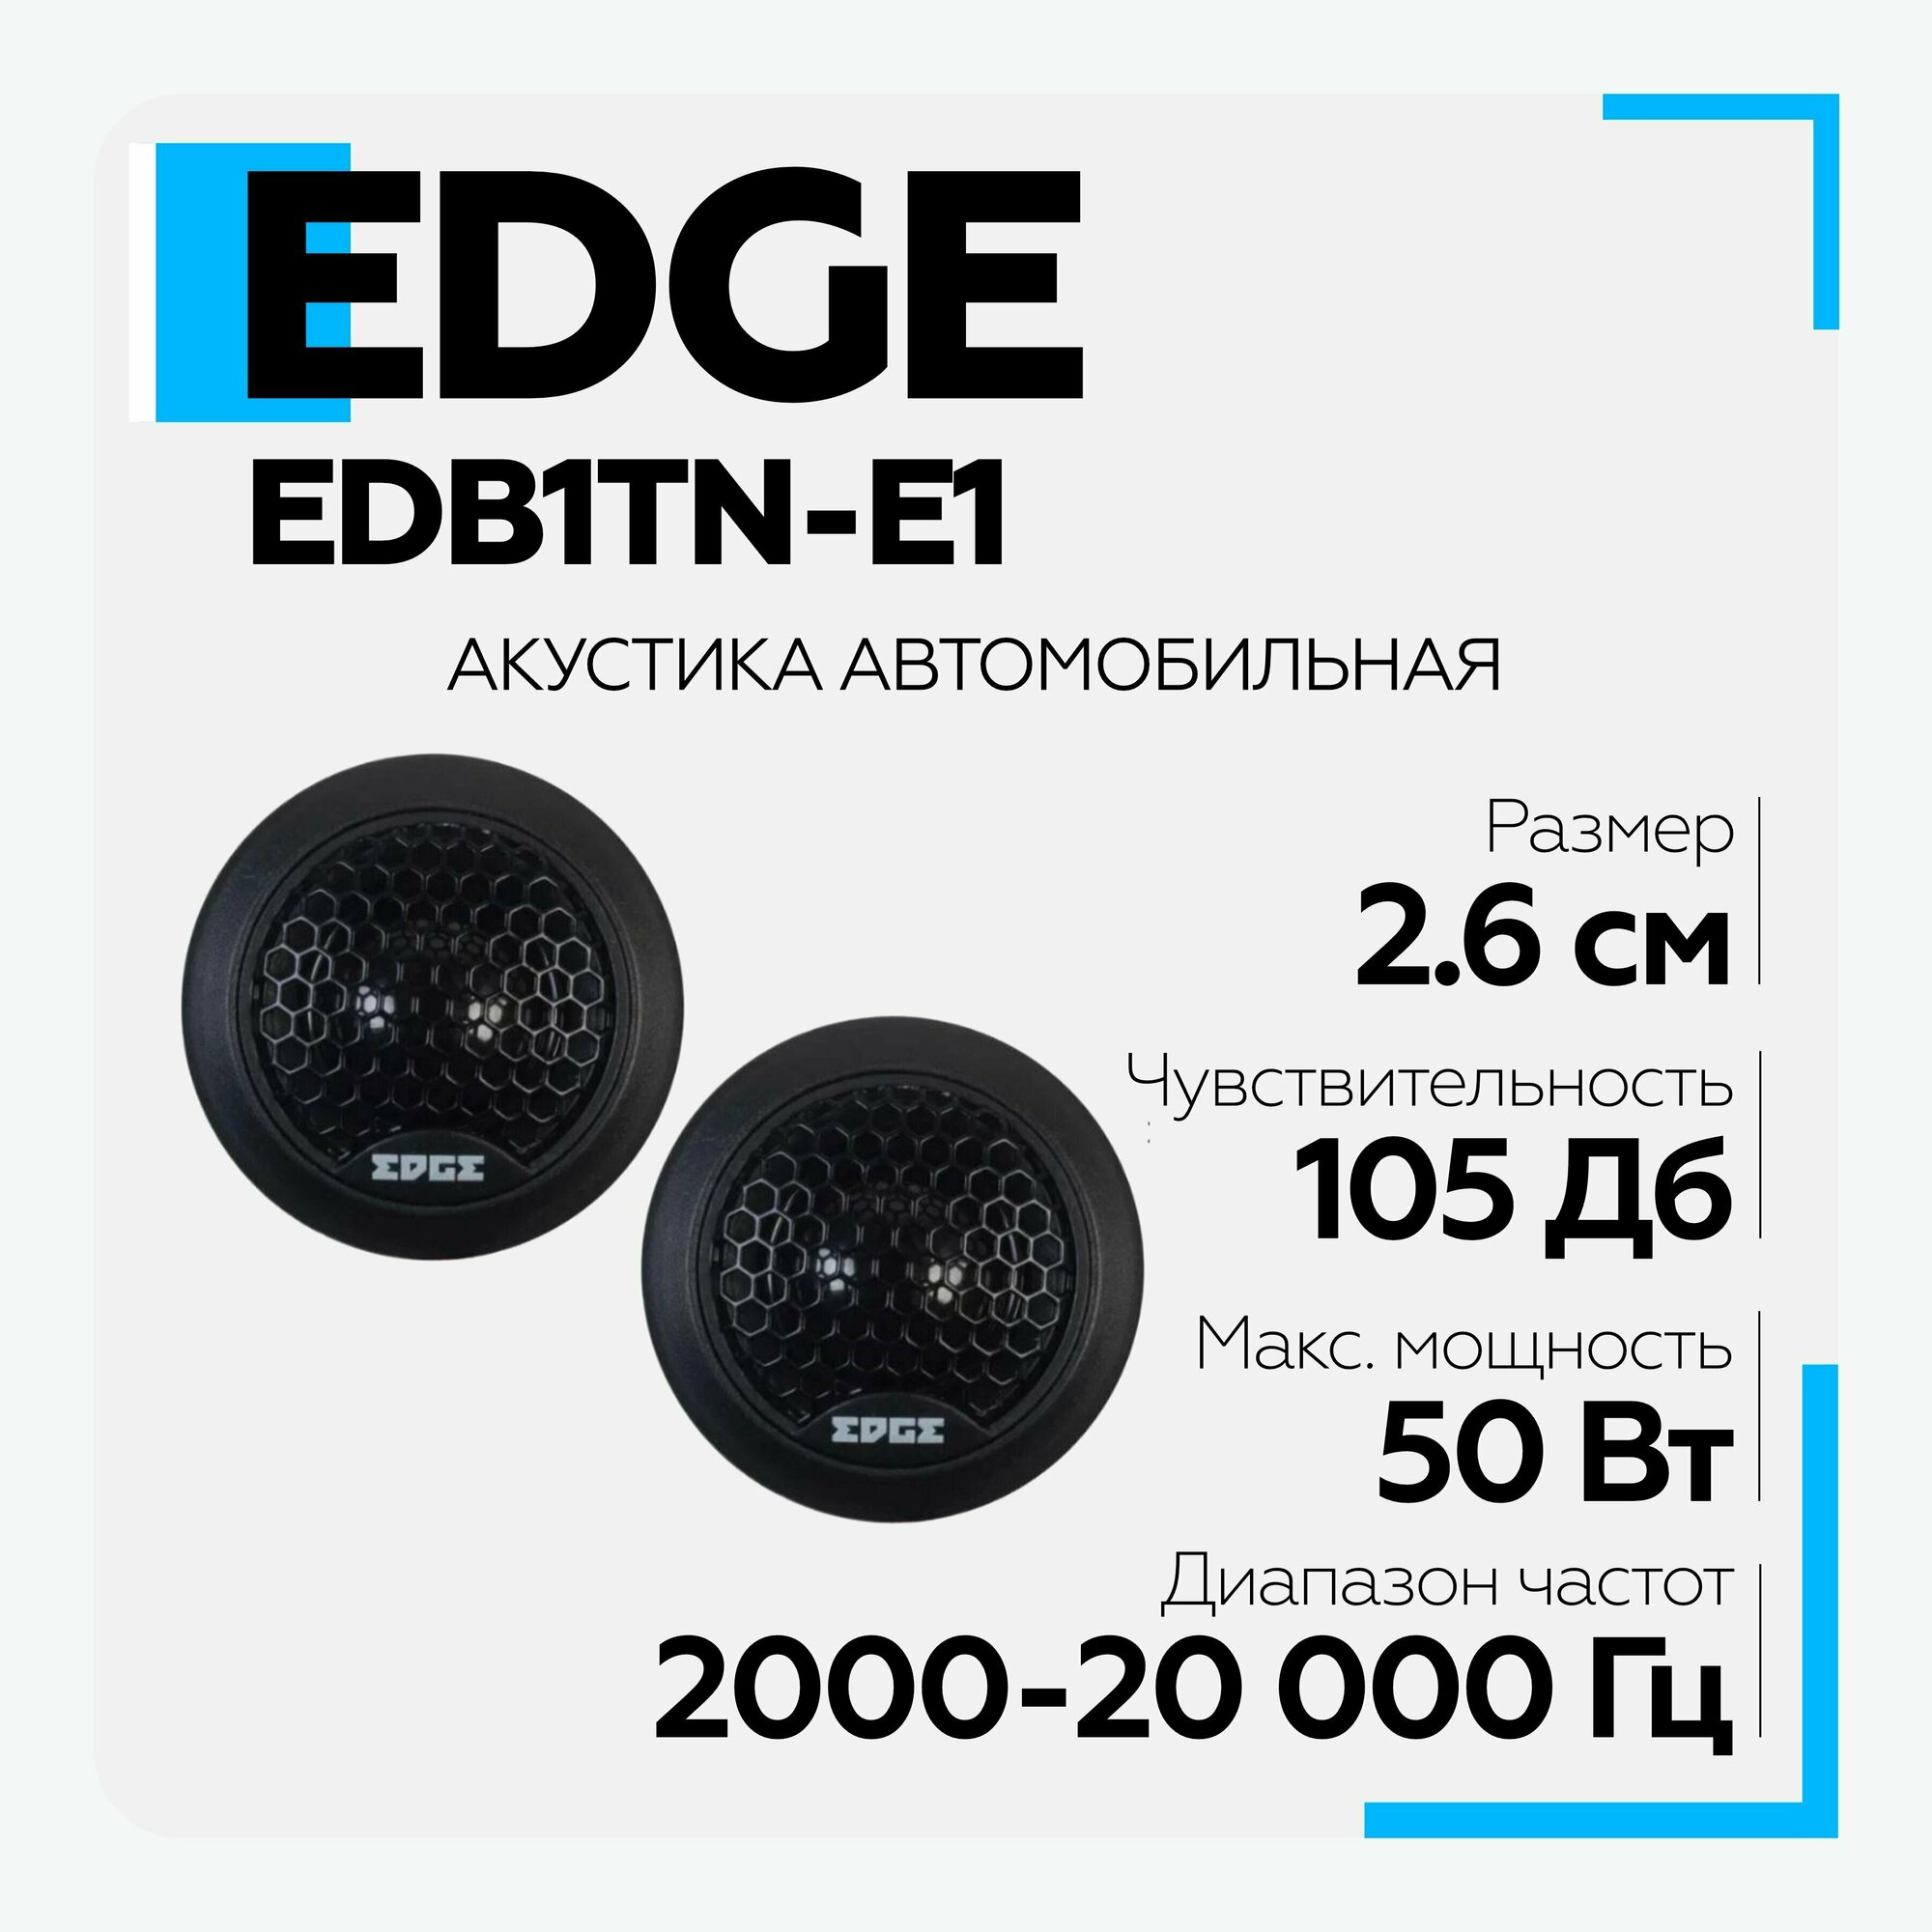 Акустическая система EDGE EDB1TN-E1